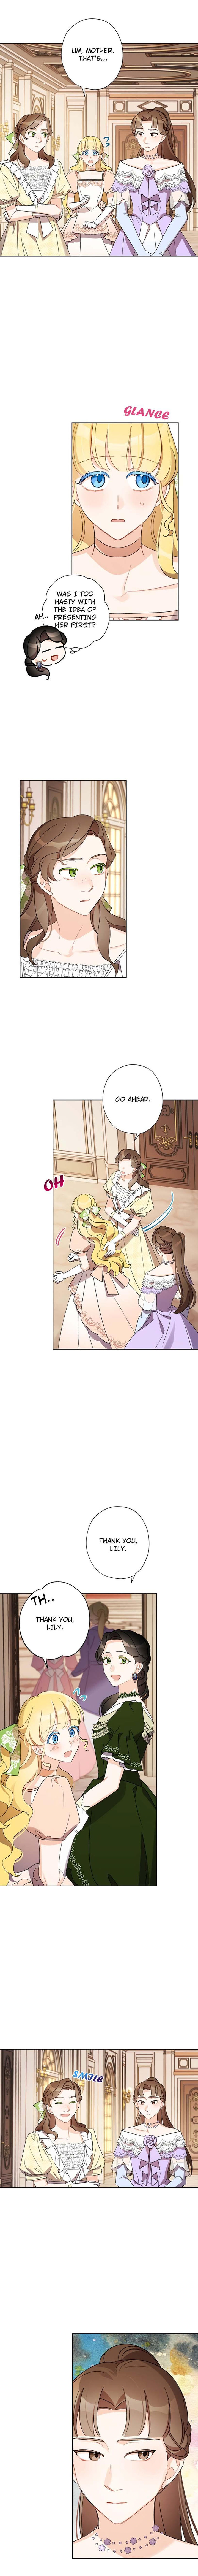 I Raised Cinderella Preciously - Chapter 34 Page 8